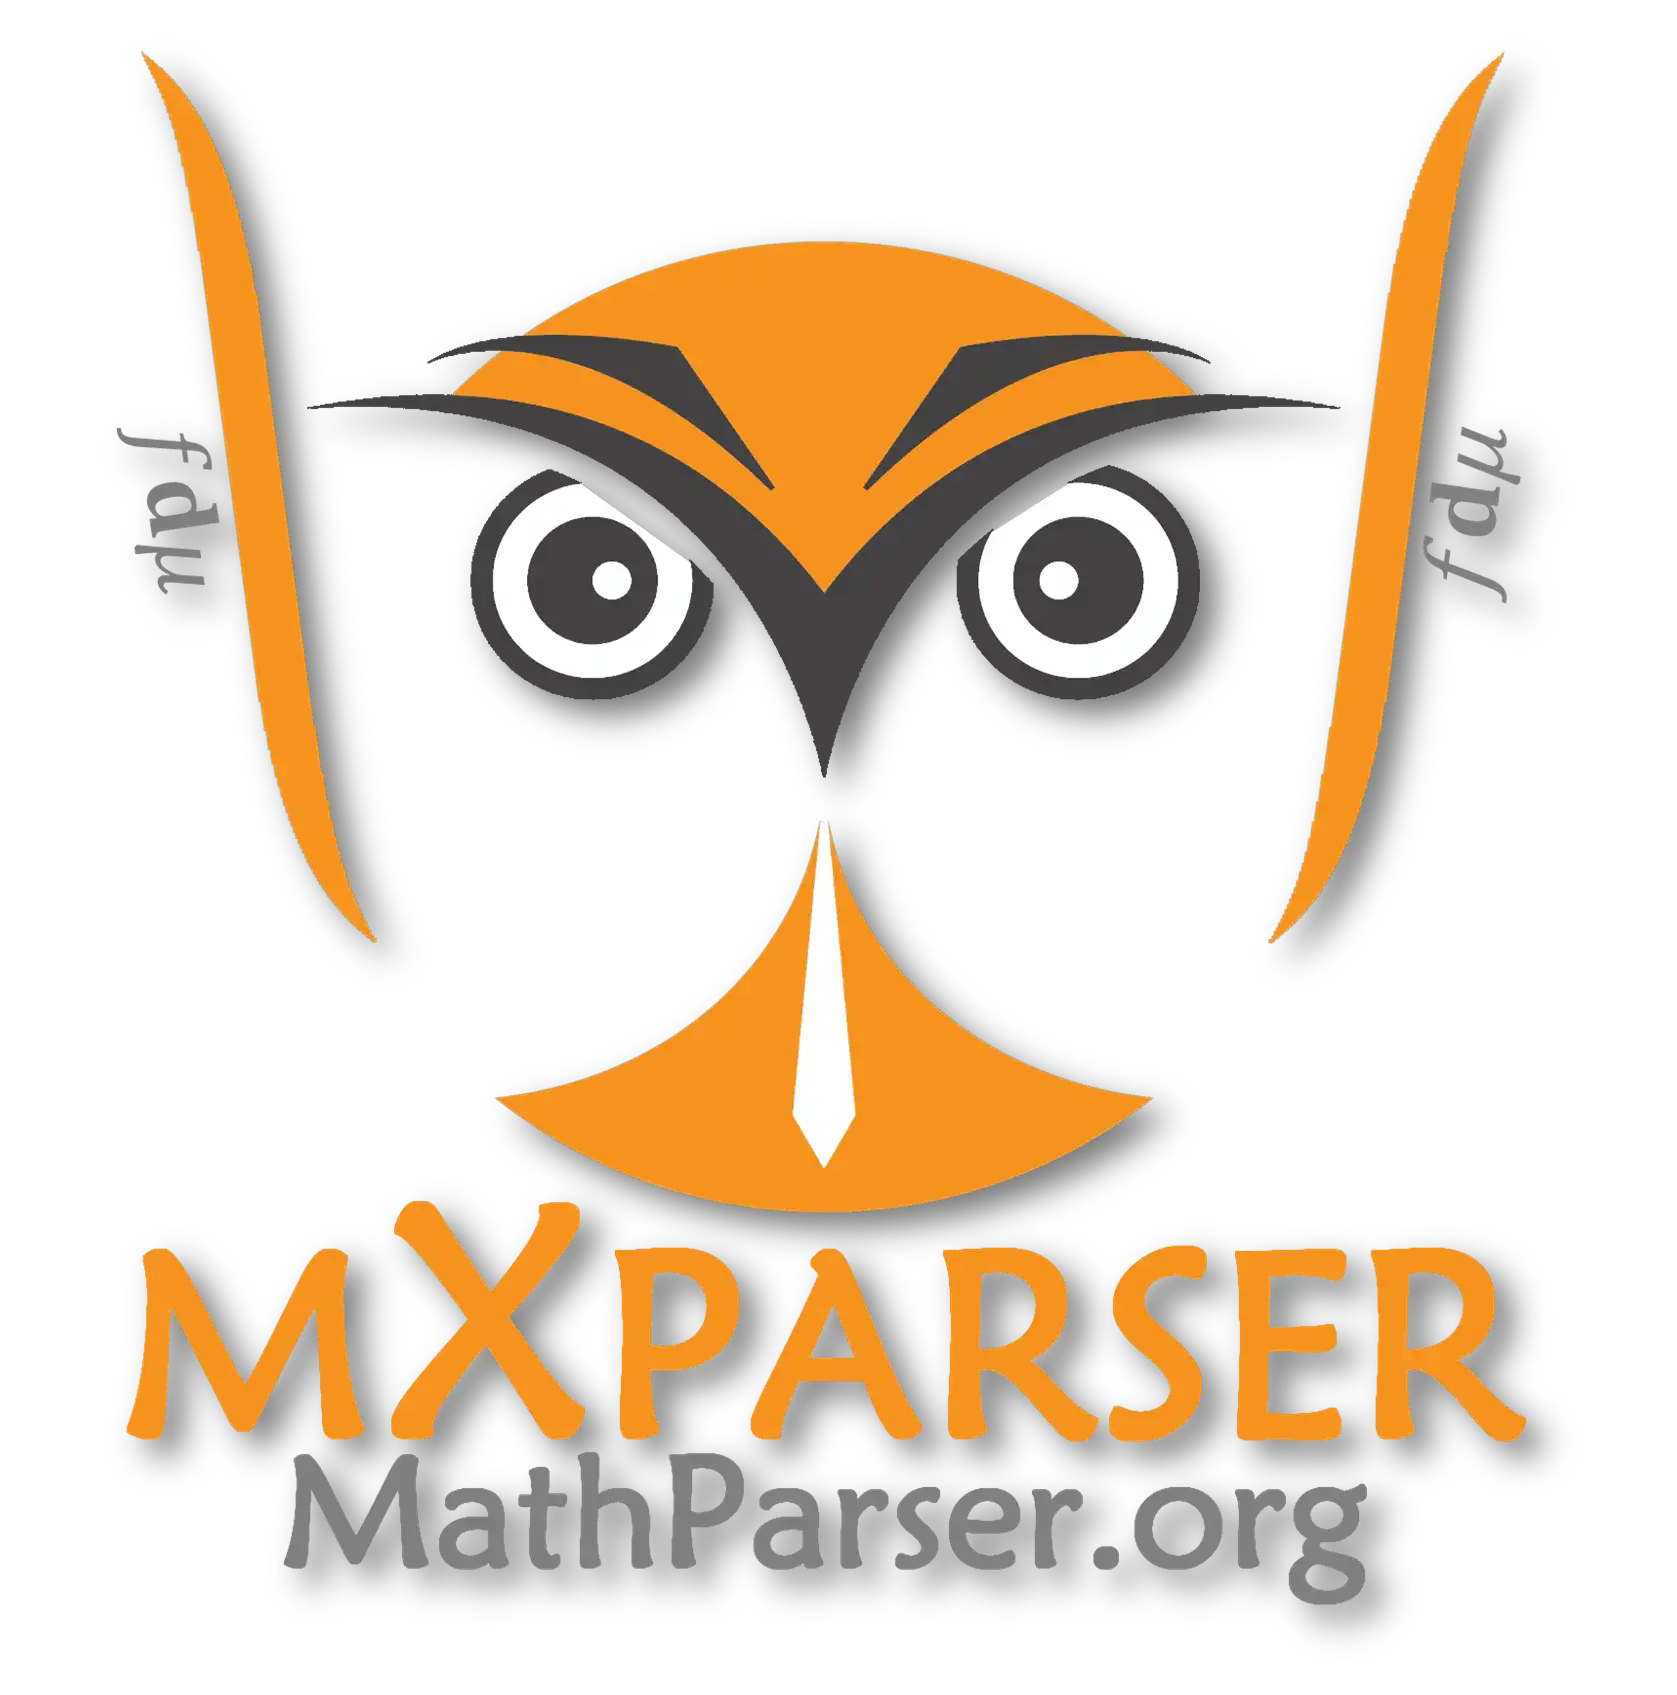 Download web tool or web app mXparser - Math Parser Java C# Library